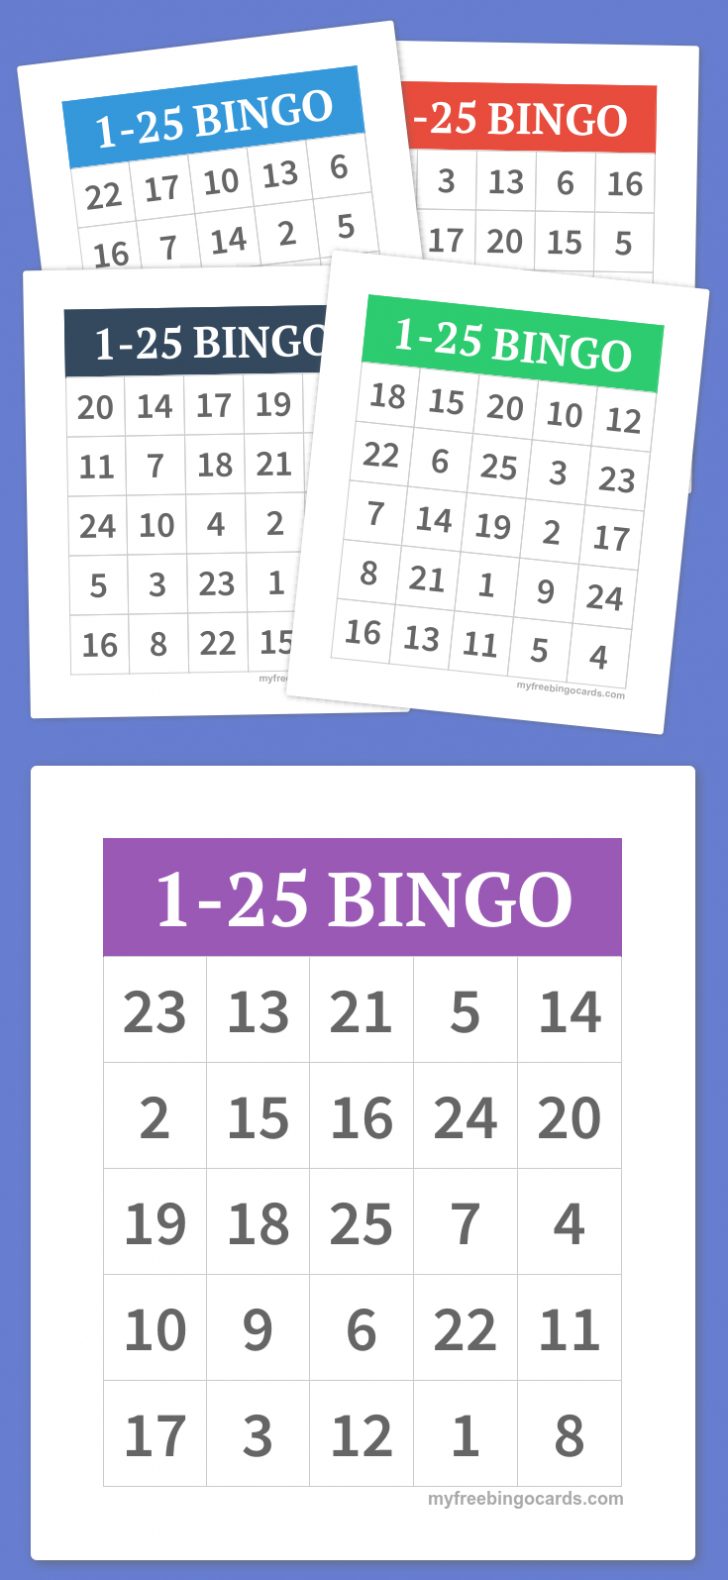 Free Printable Bingo Cards and Call Sheet